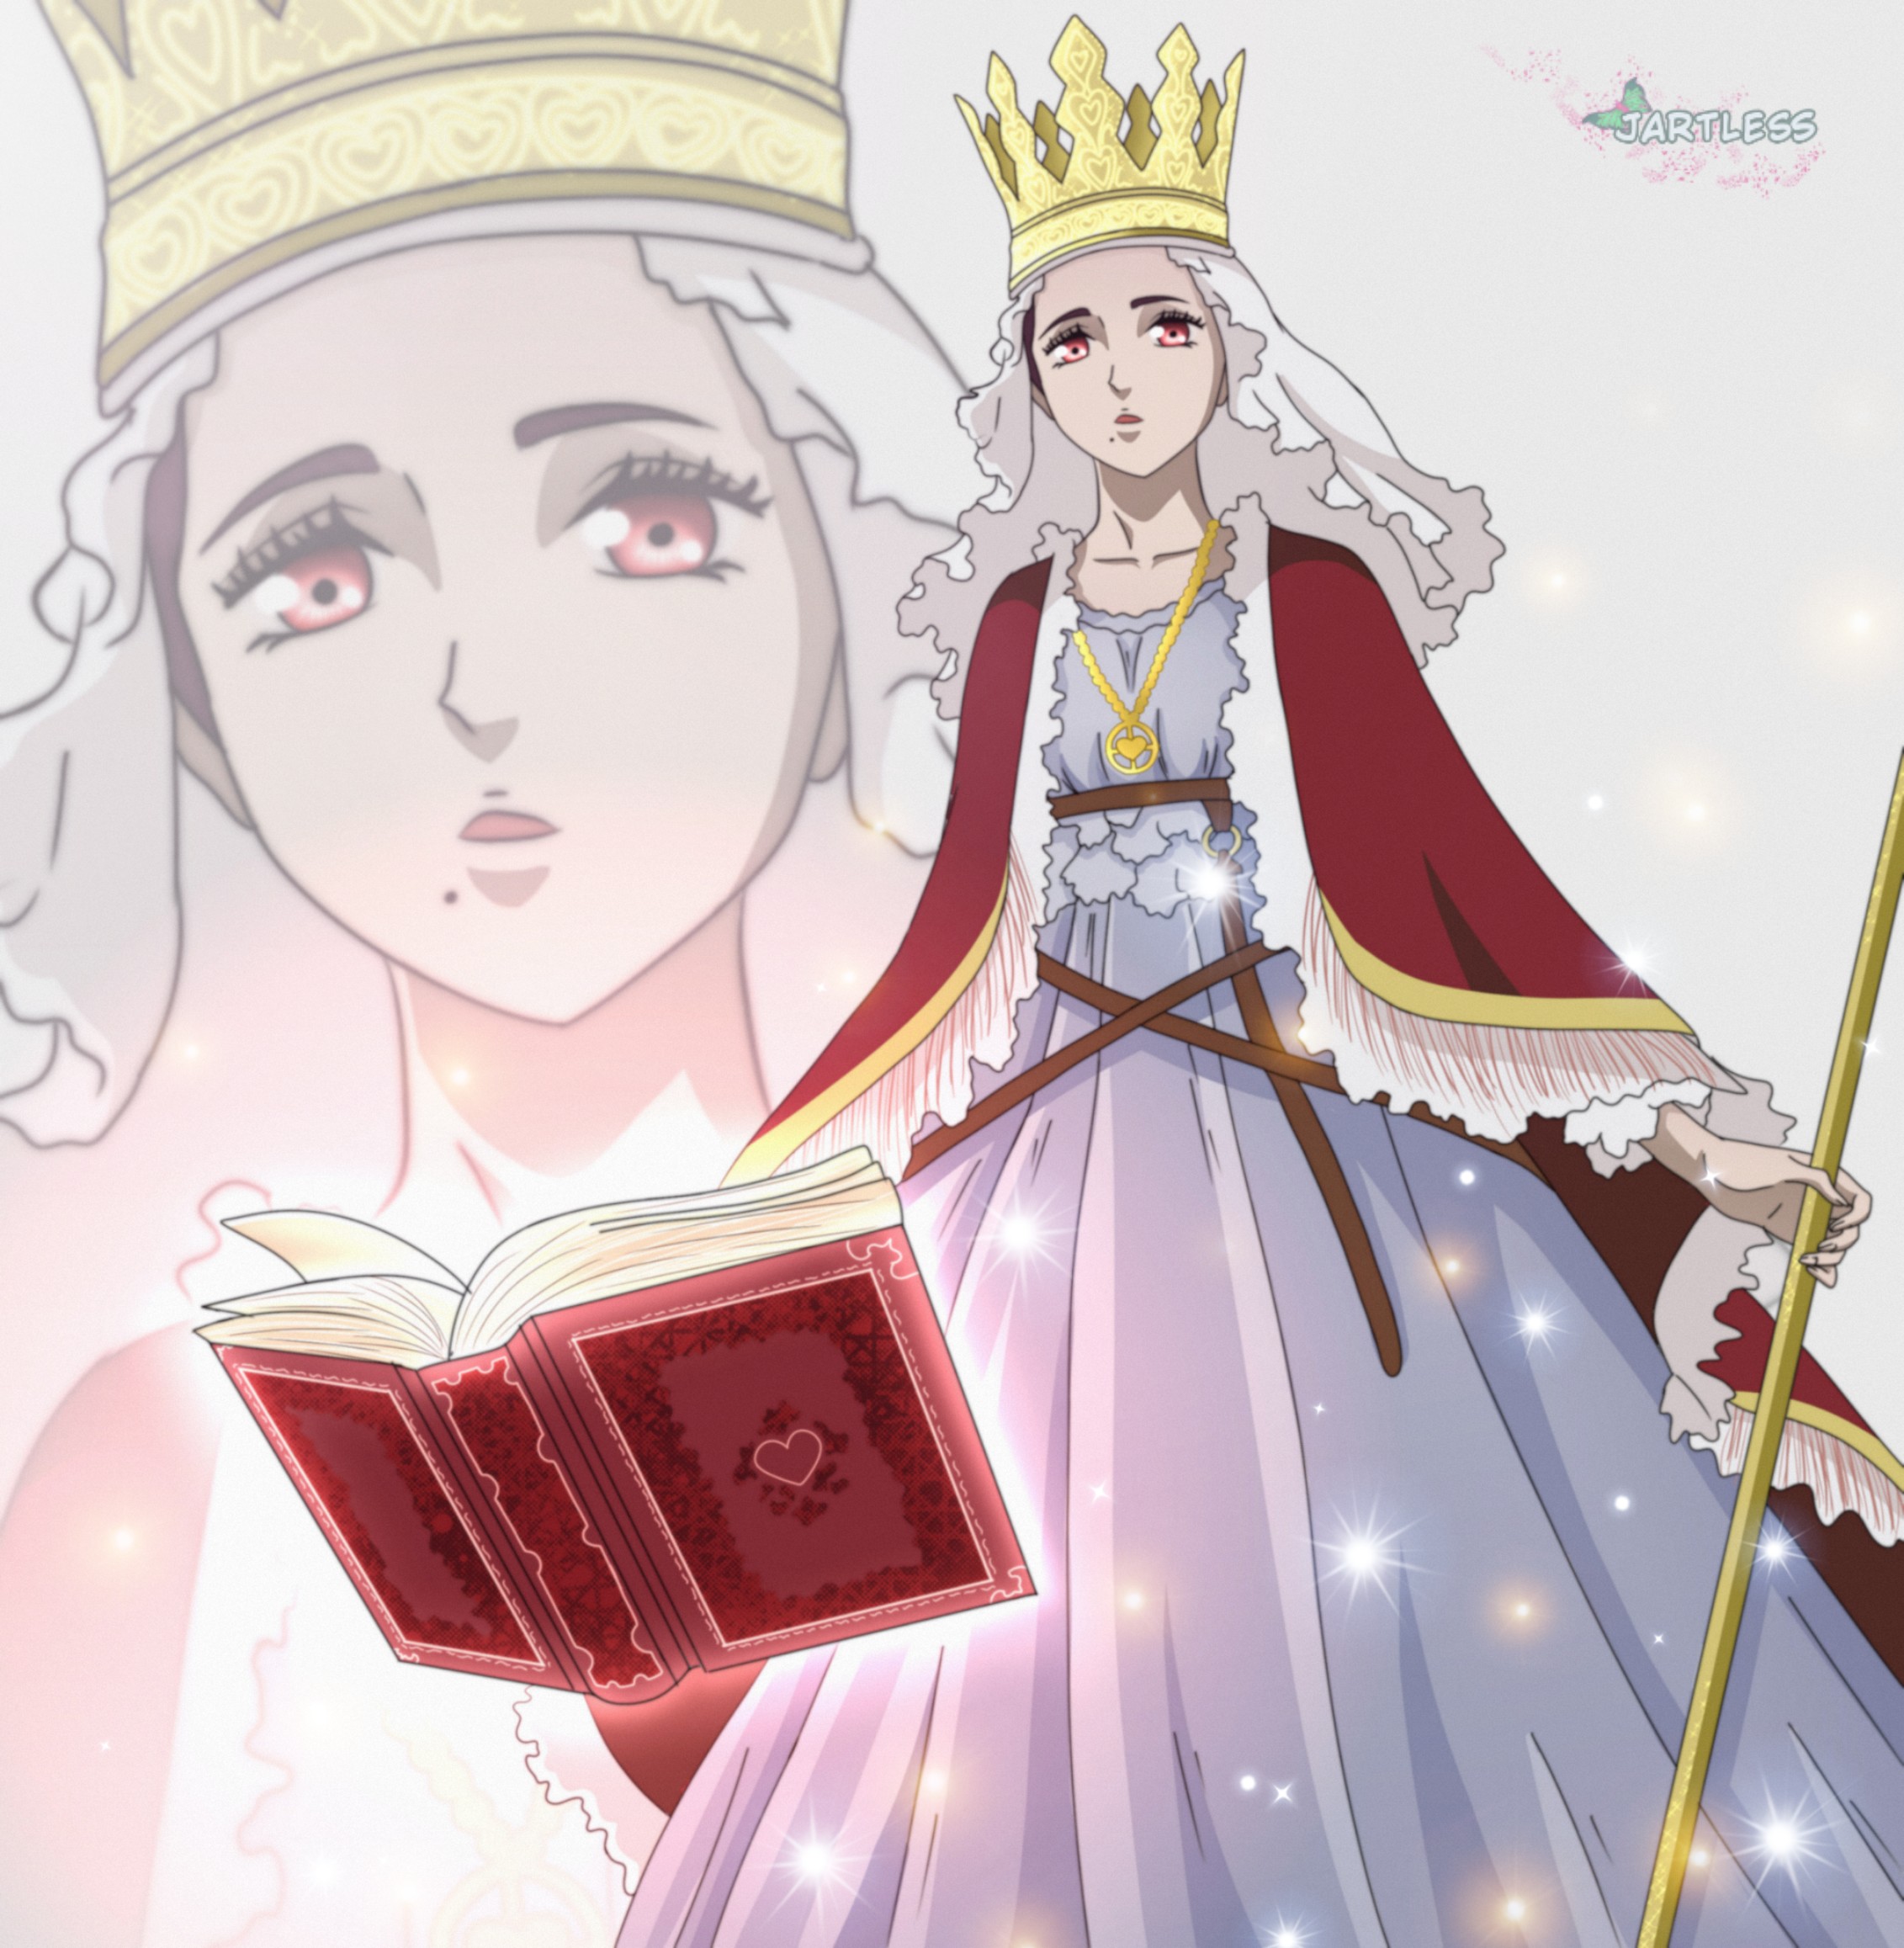 The Heart Kingdom Queen By Jartless On Deviantart